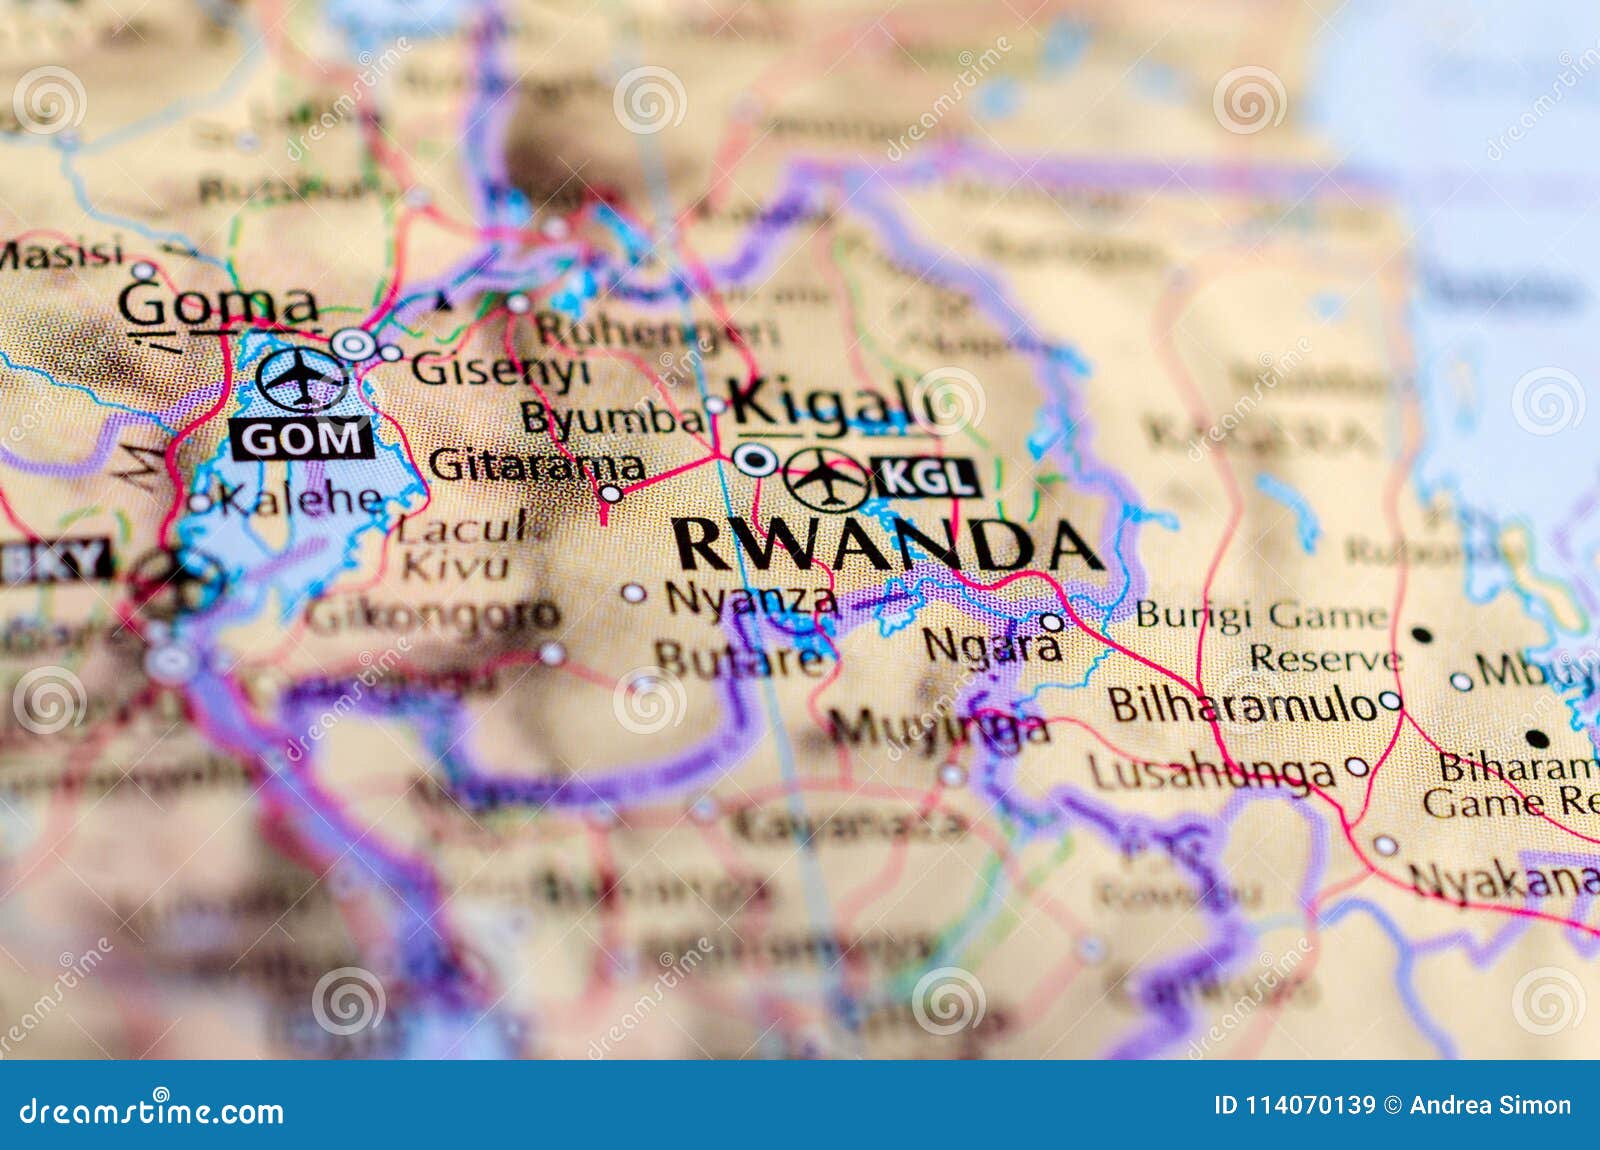 kigali rwanda on map